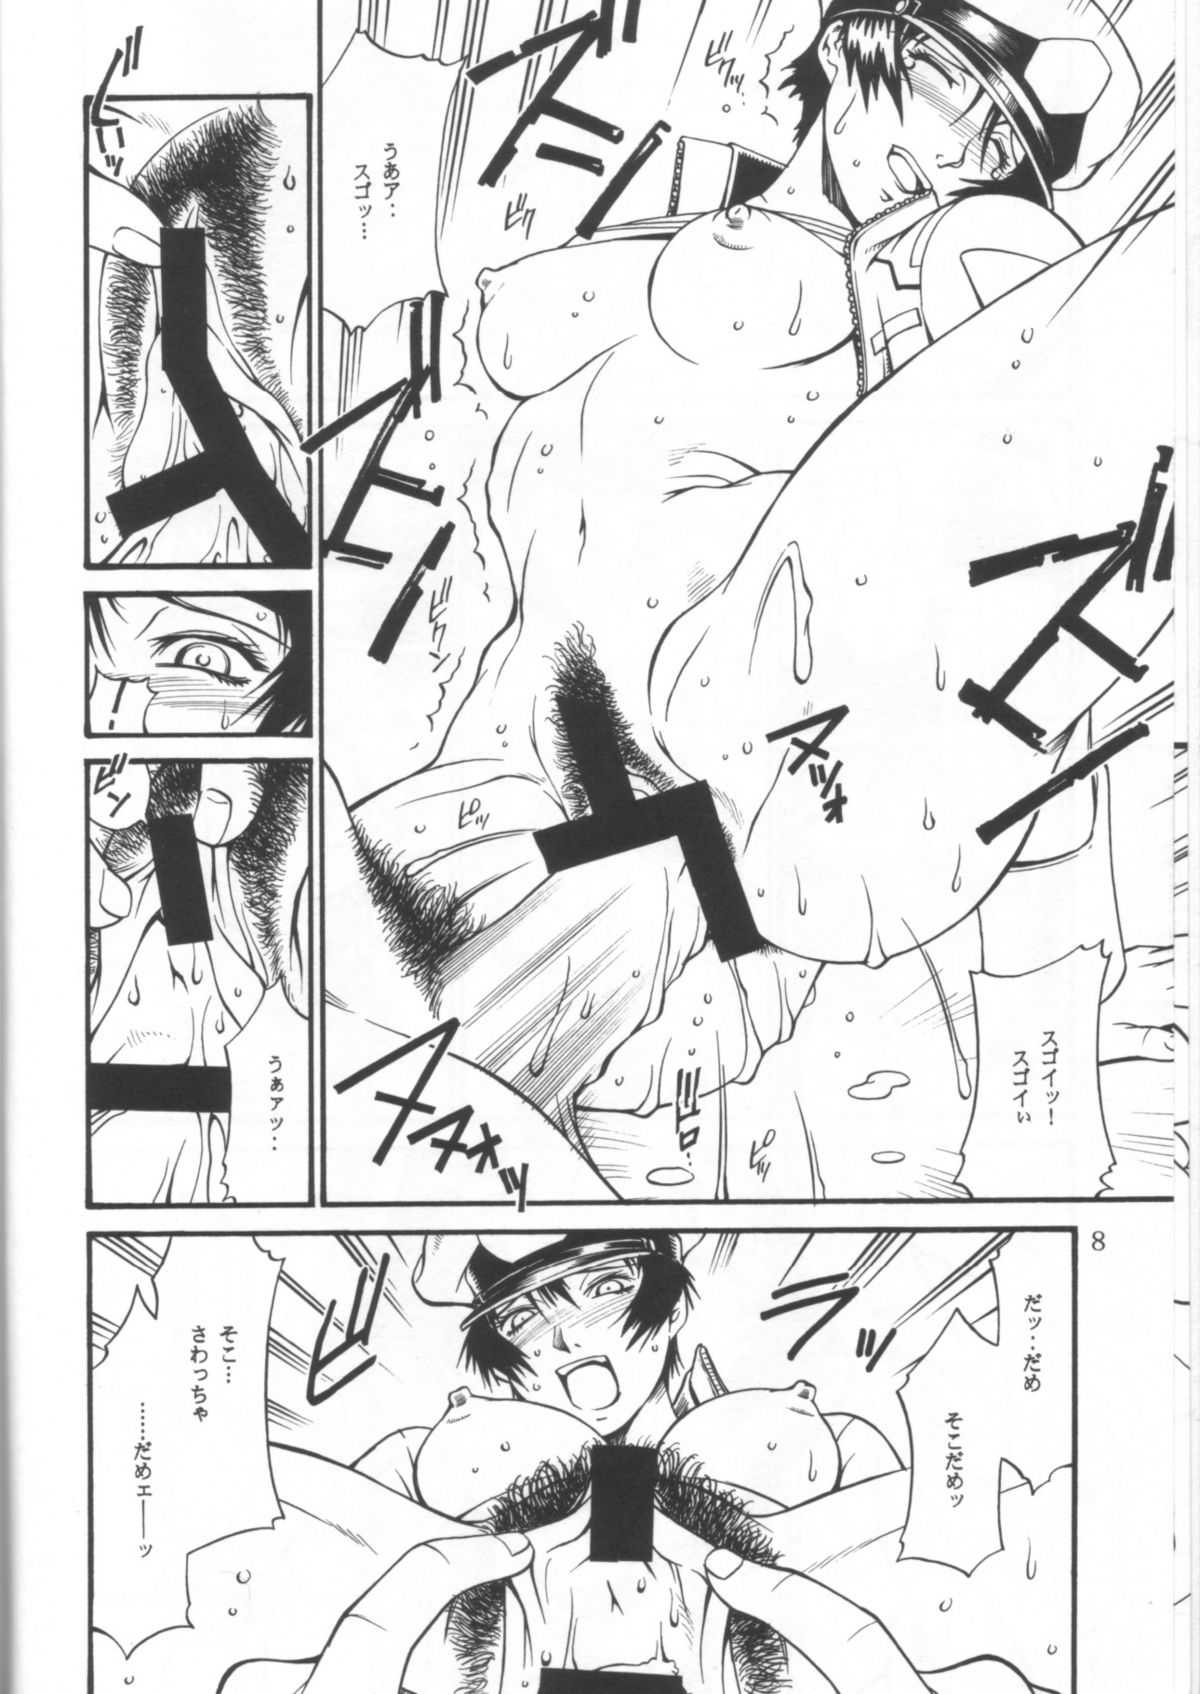 [Sangatsu no Lion] SEED ON (Kidou Senshi Gundam SEED / Mobile Suit Gundam SEED) [三月のライオン] SEED ON (機動戦士ガンダムSEED)